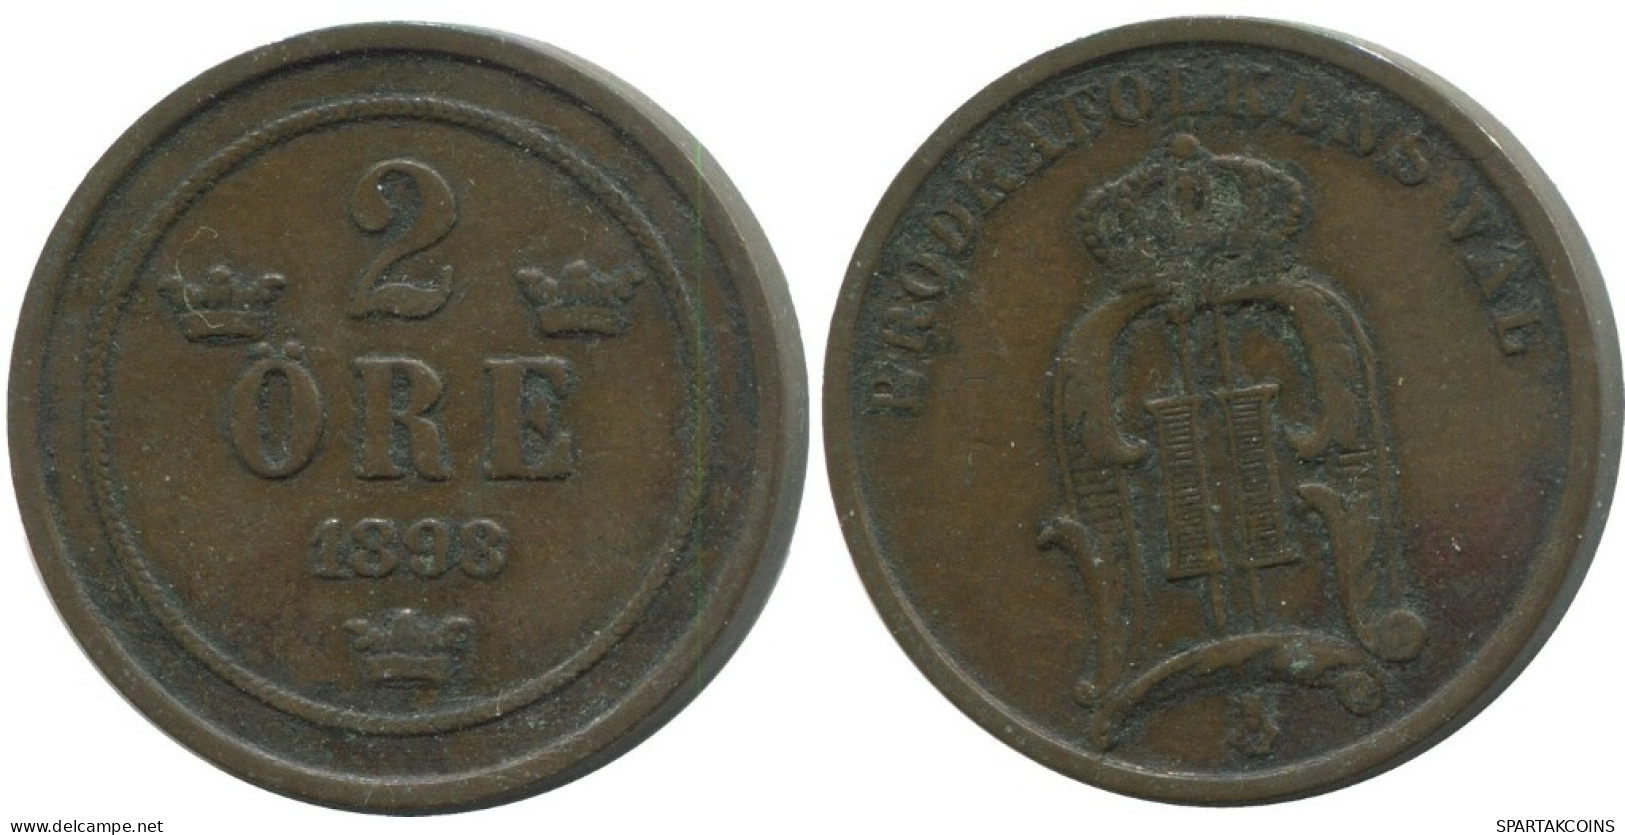 2 ORE 1898 SUECIA SWEDEN Moneda #AC894.2.E.A - Sweden